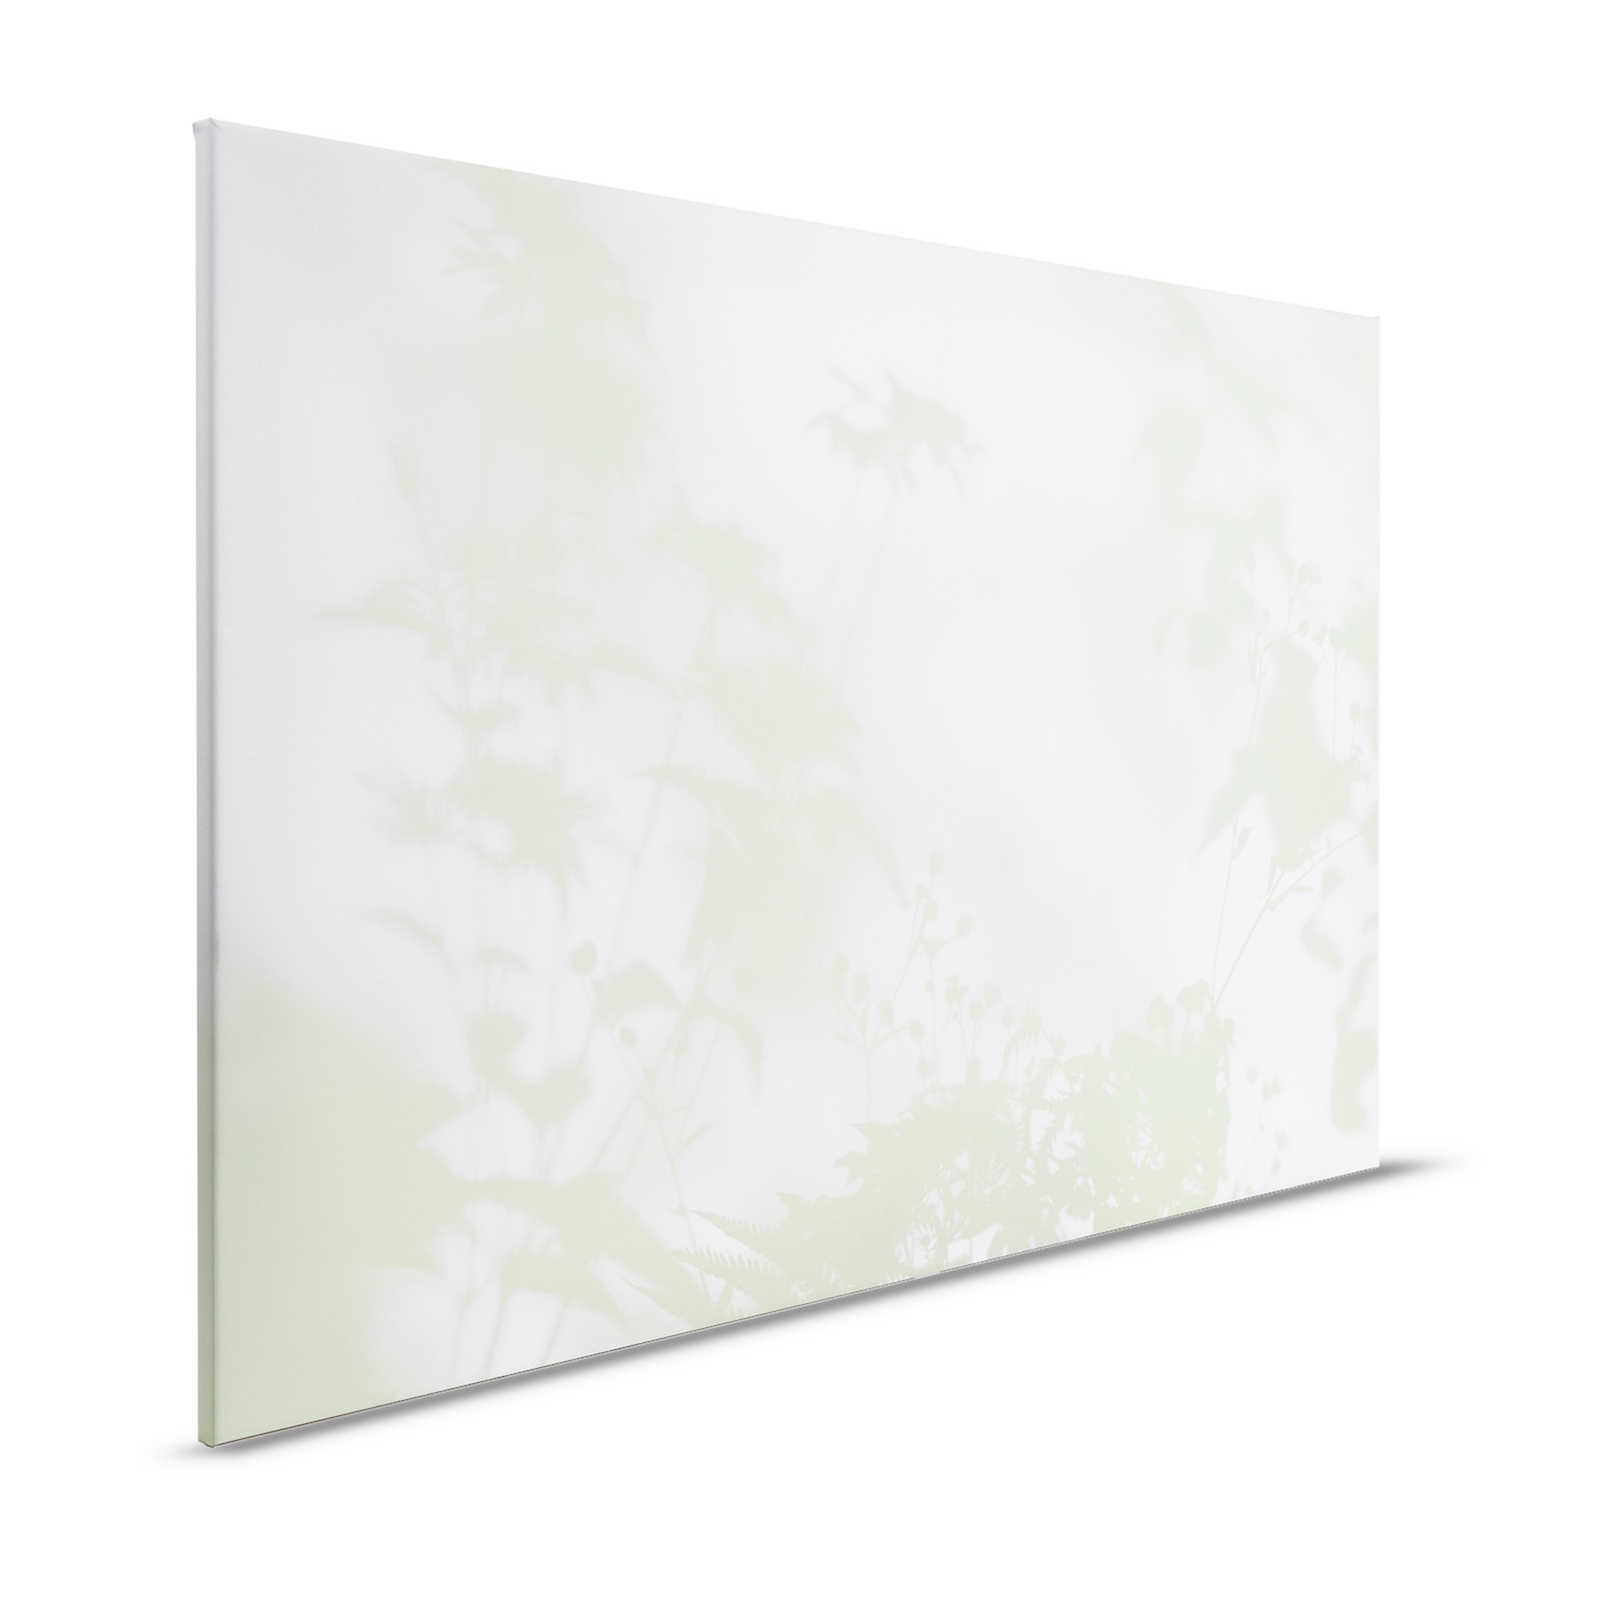 Shadow Room 3 - Natur Leinwandbild Grün & Weiß, verblasstes Design – 1,20 m x 0,80 m
